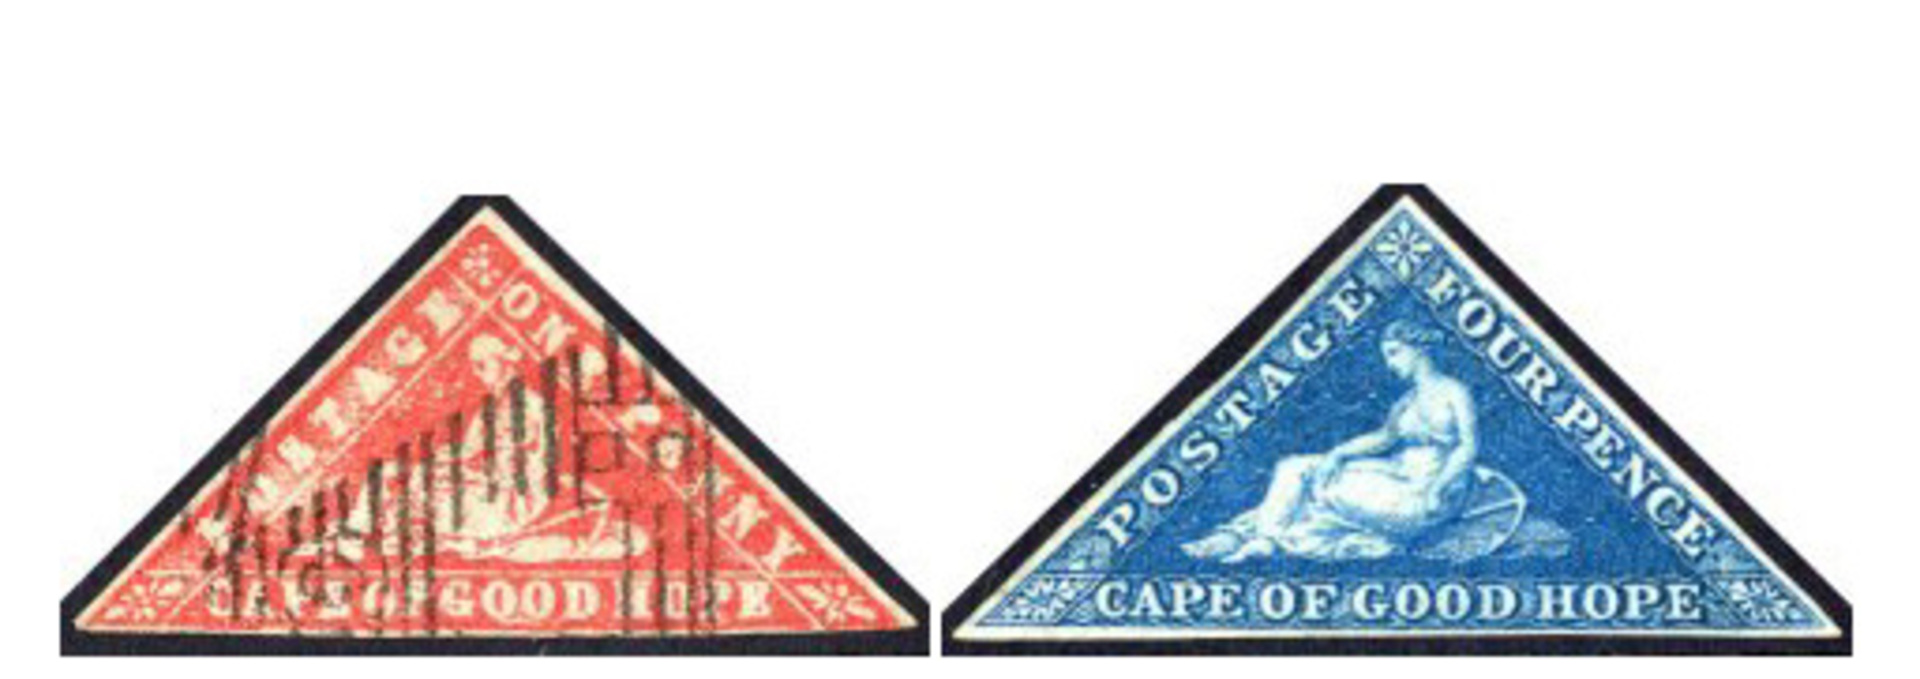 Cape of Good Hope triangulars